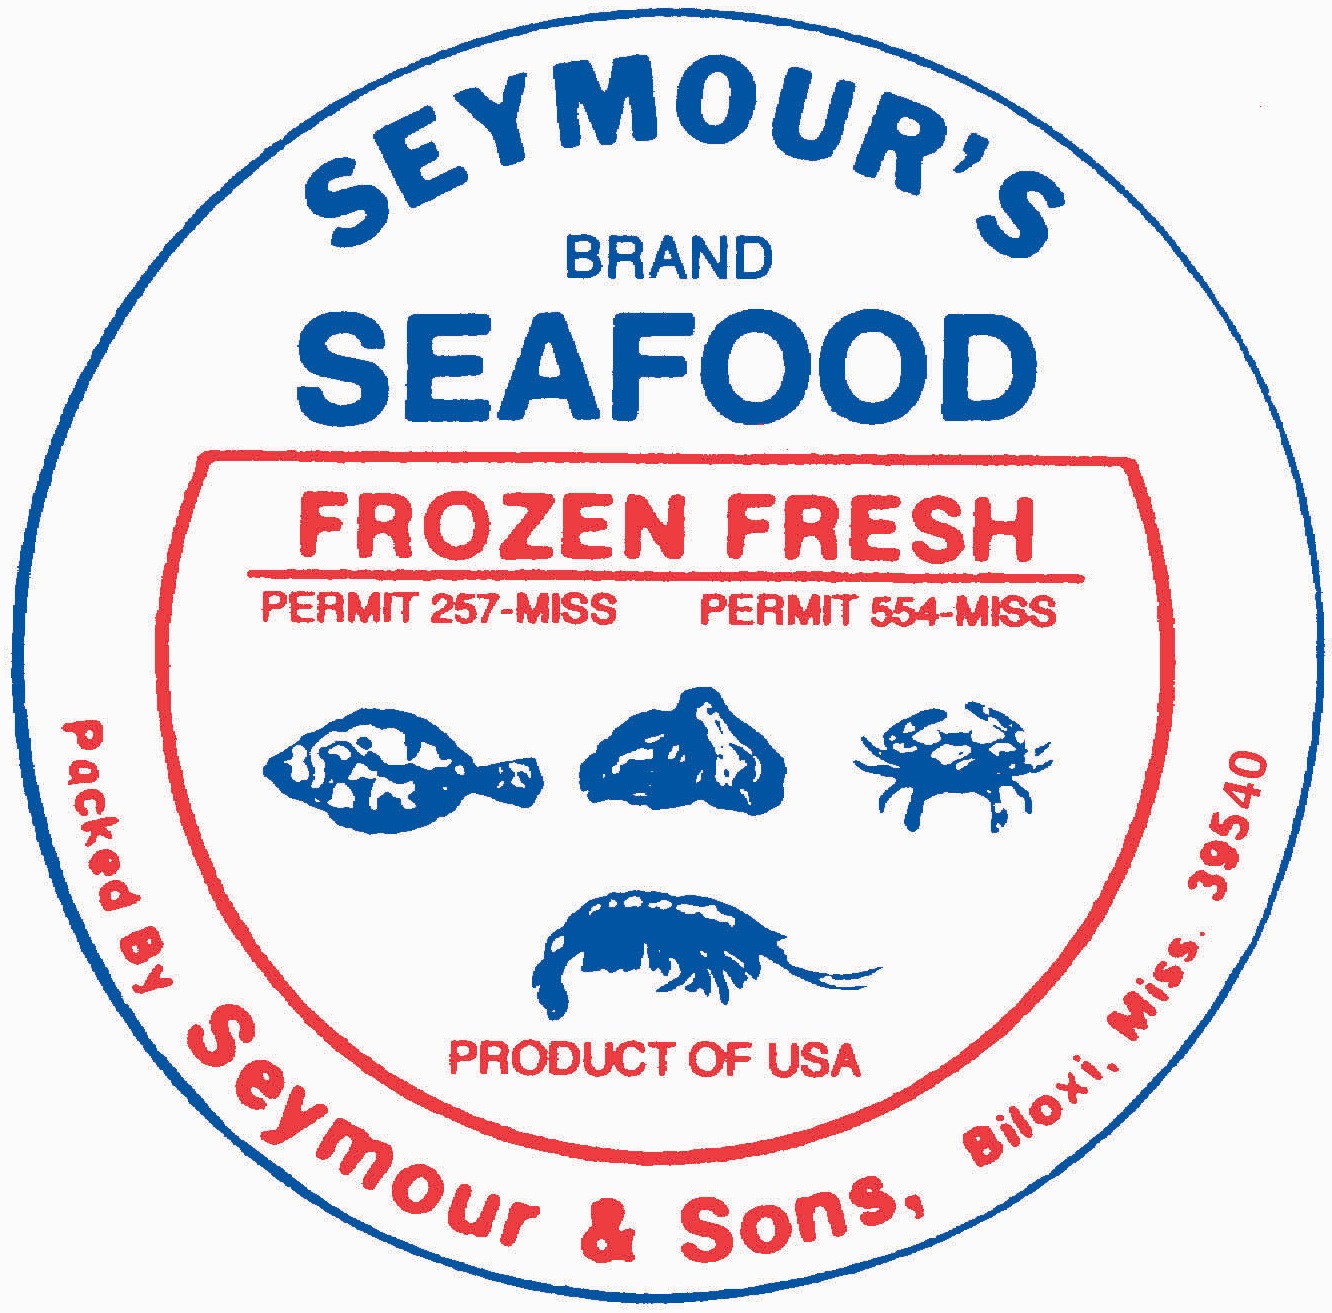 Seymour and Sons Seafood Inc.